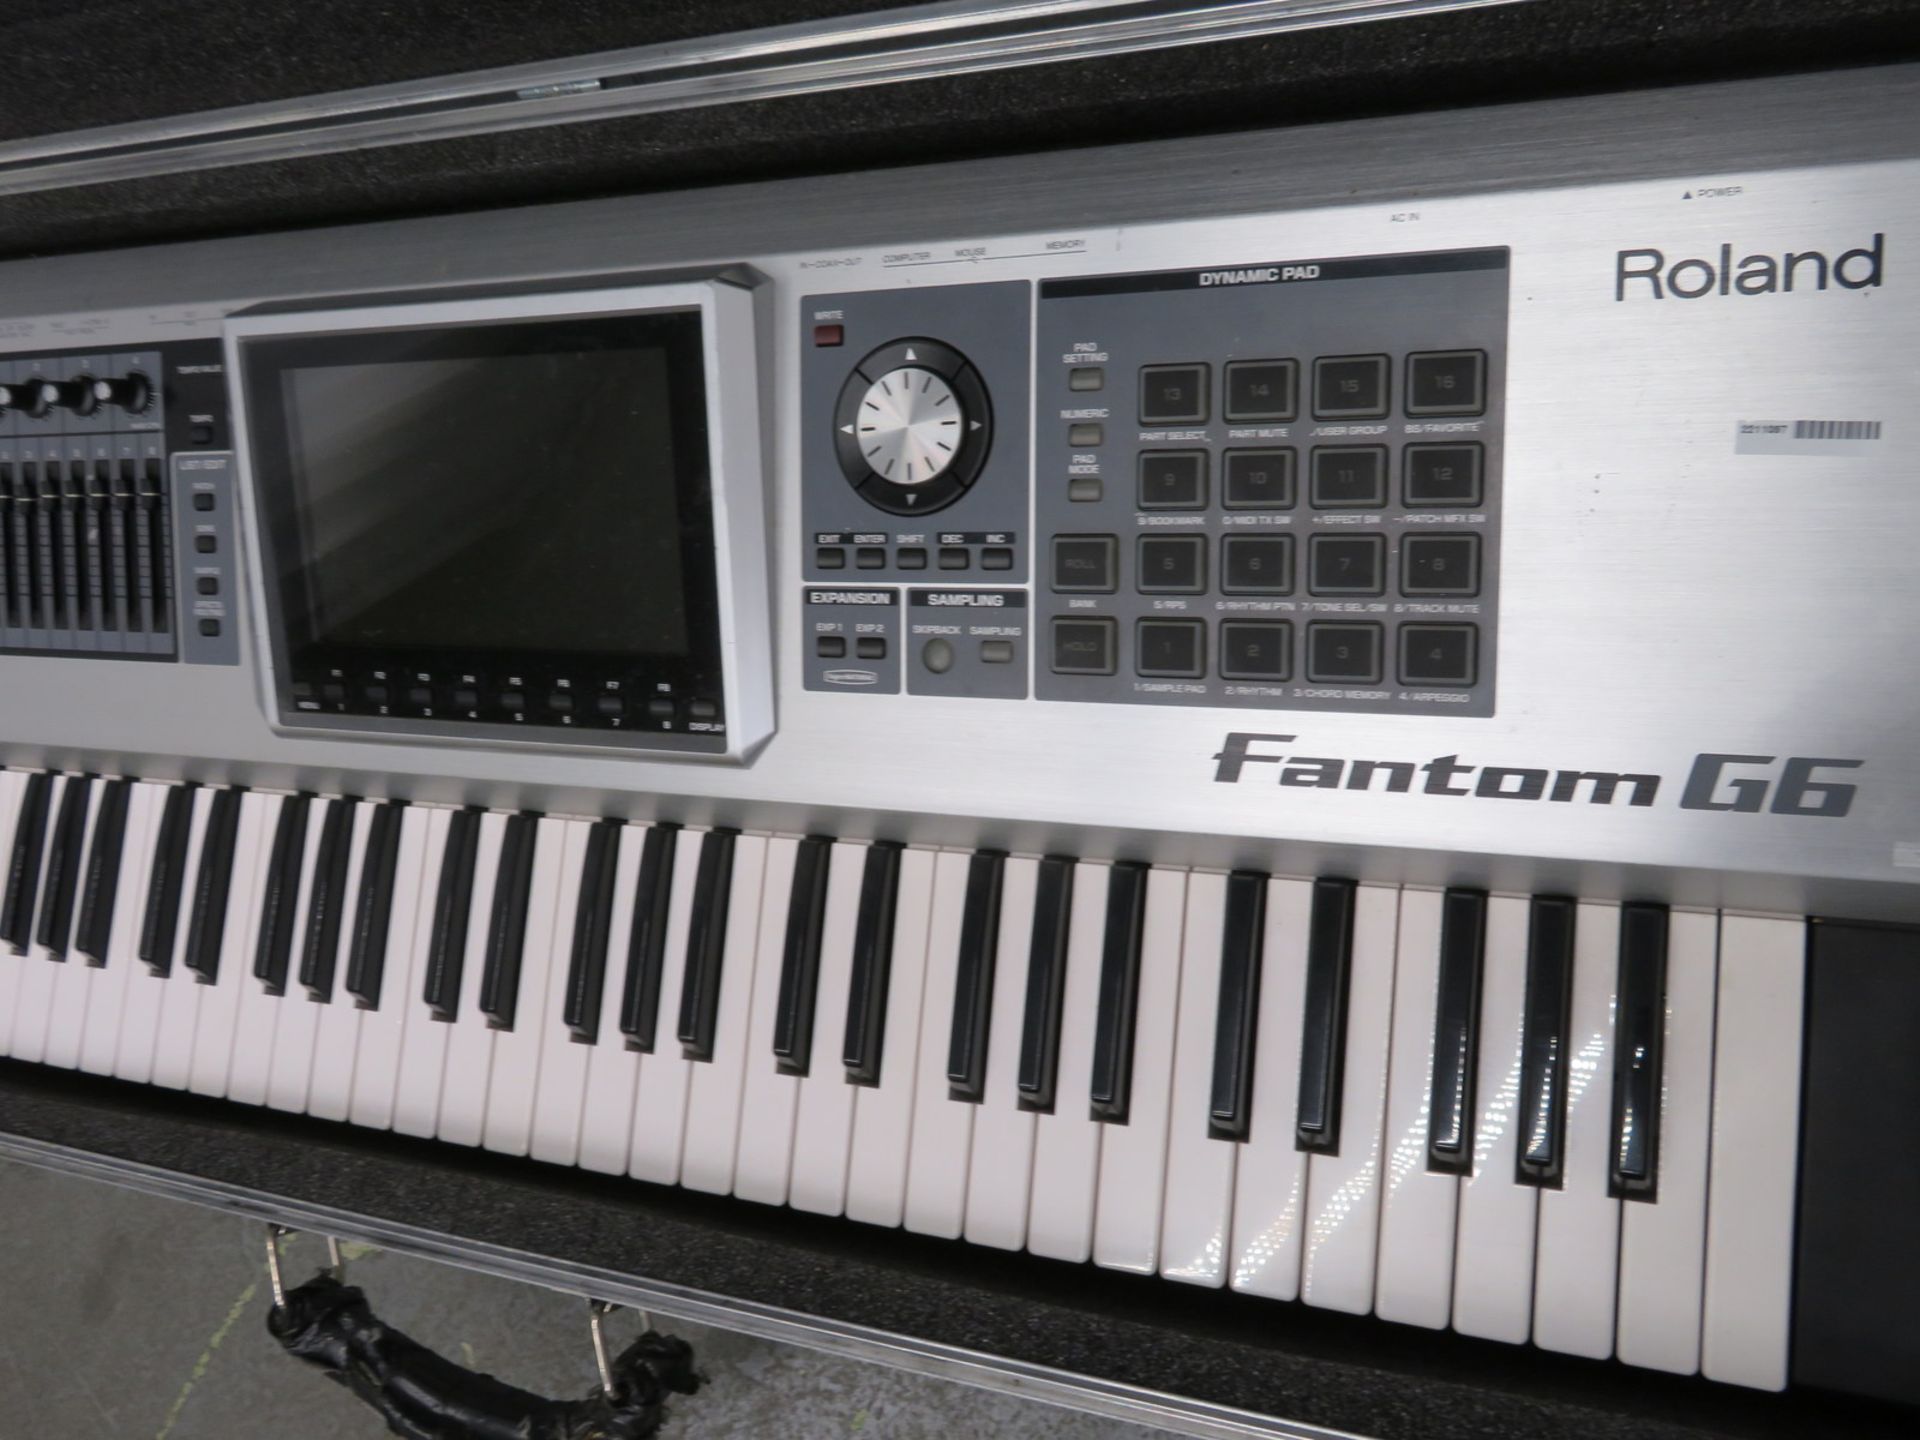 Roland Fantom 66 keyboard in flight case. Serial number: ZY67873. - Image 3 of 10